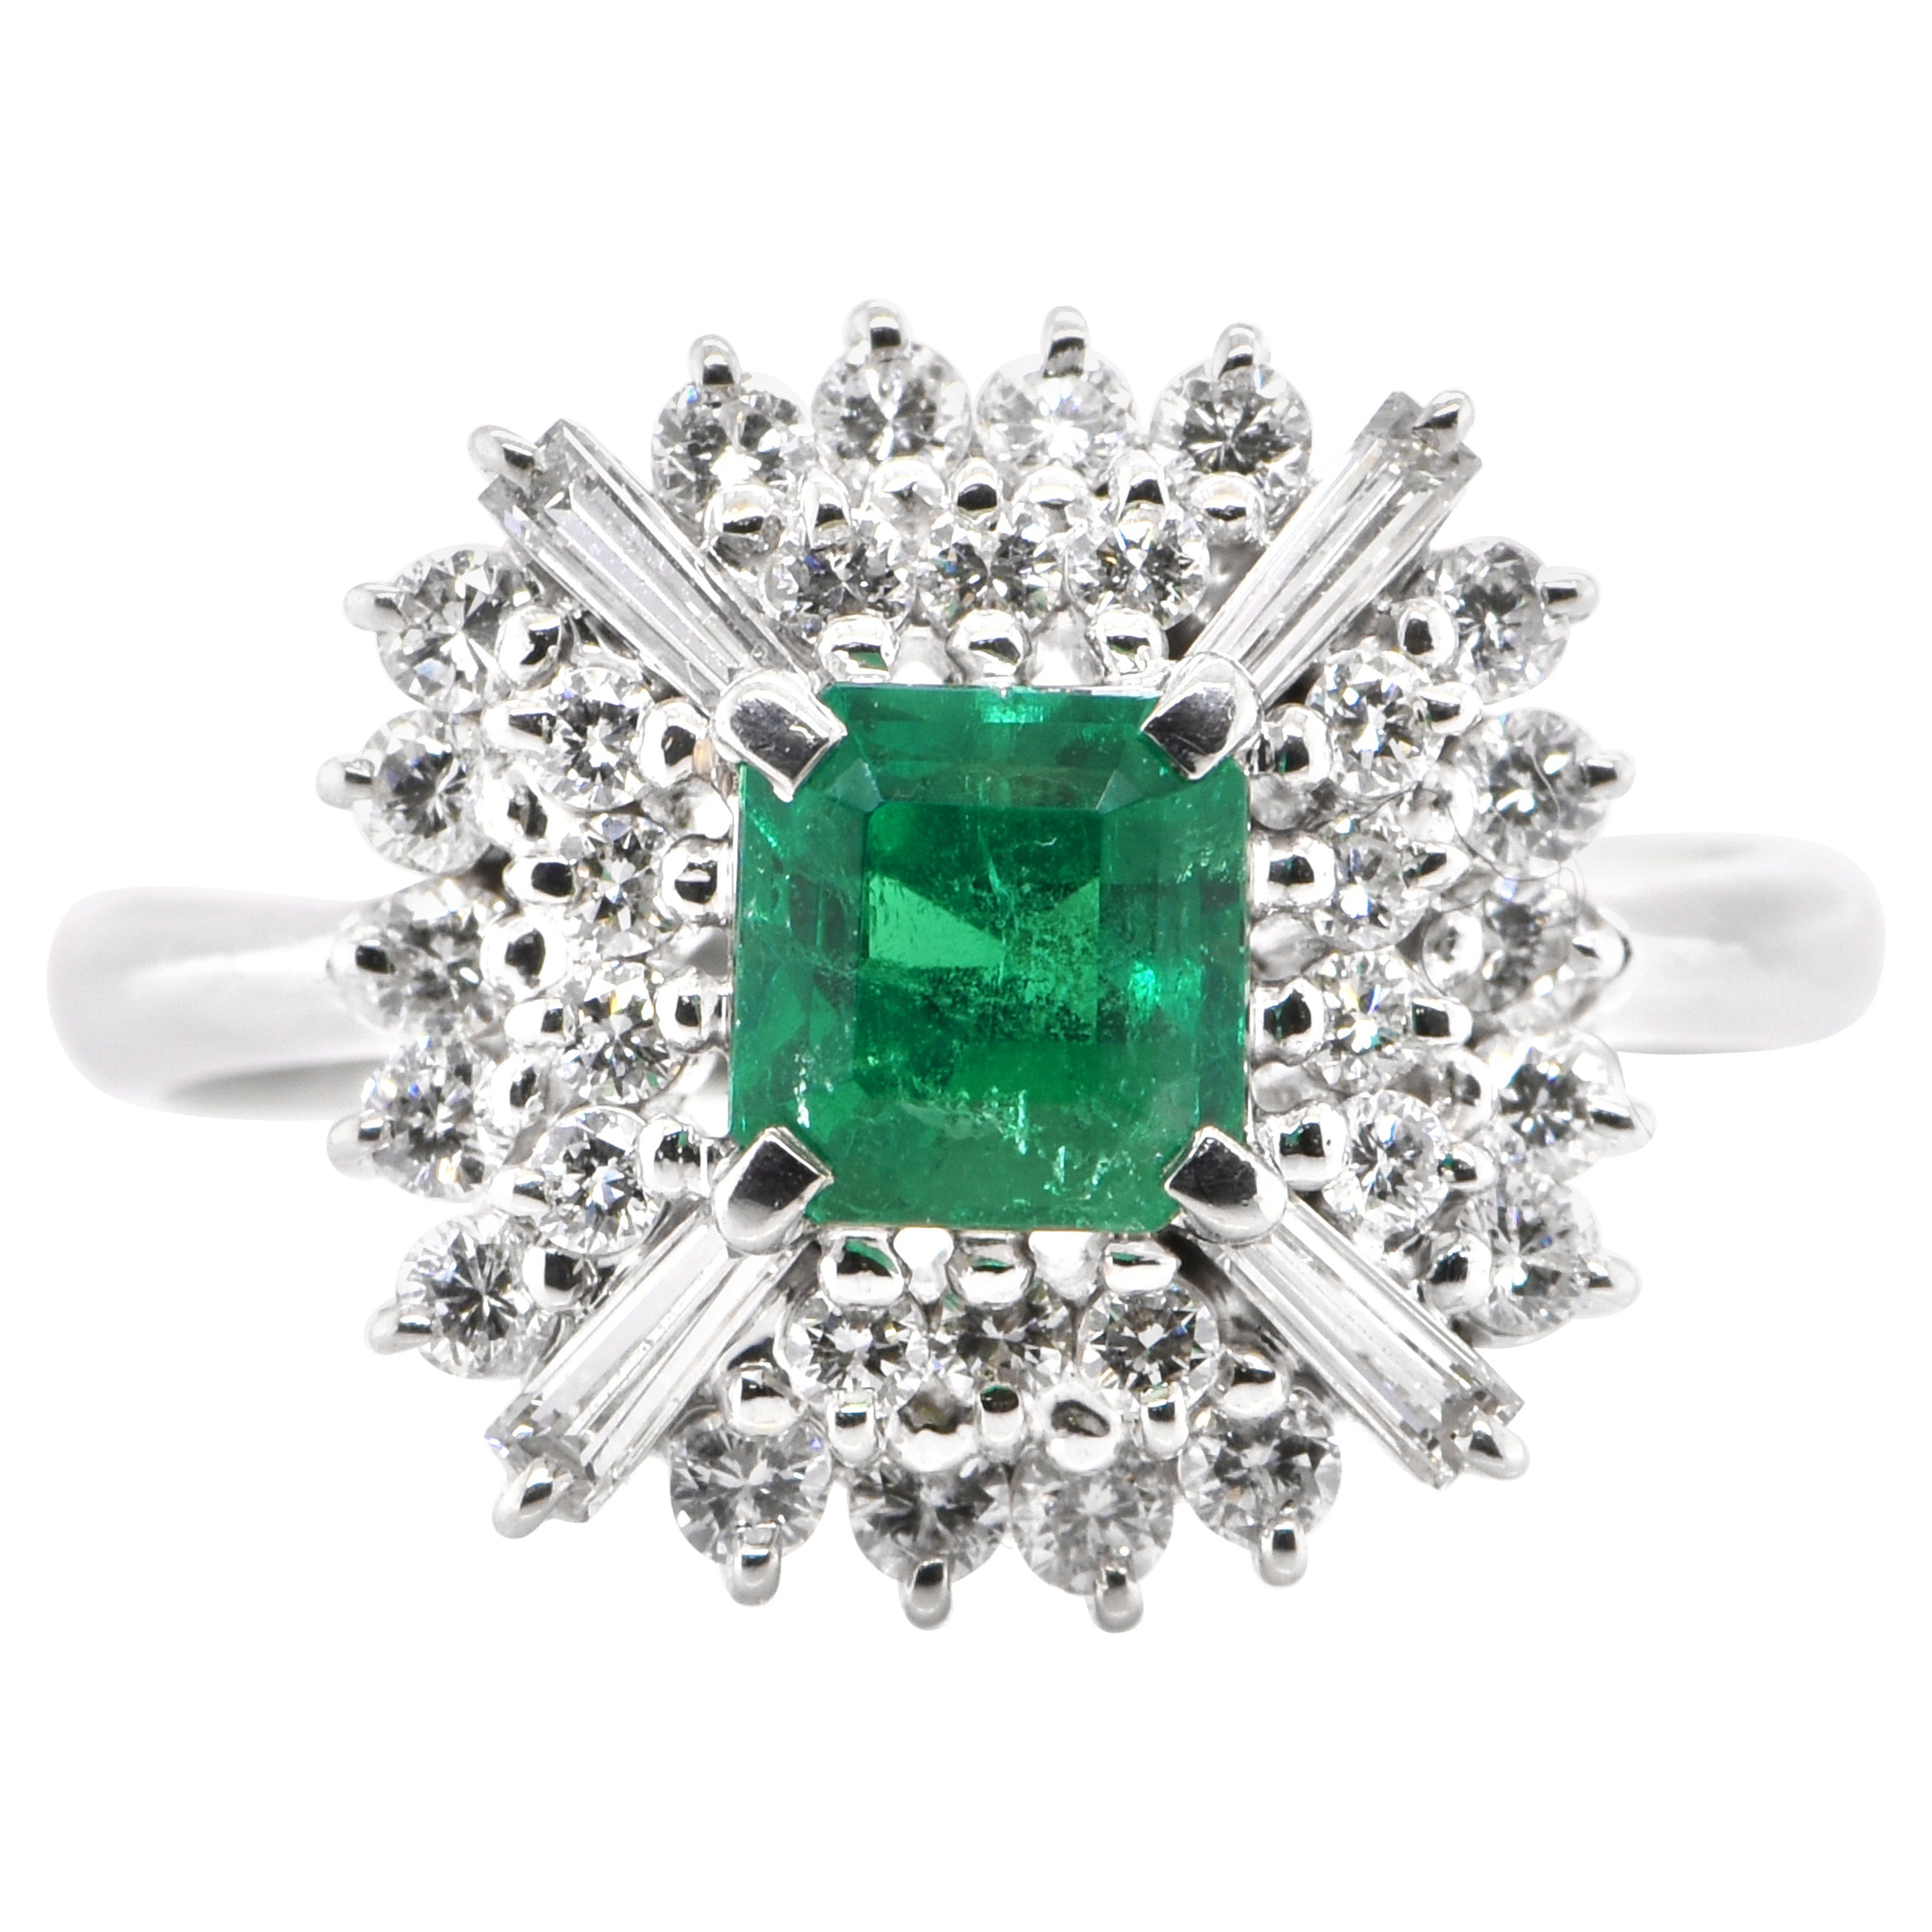 Art Deco Inspired 0.41 Carat Natural Emerald and Diamond Ring Set in Platinum